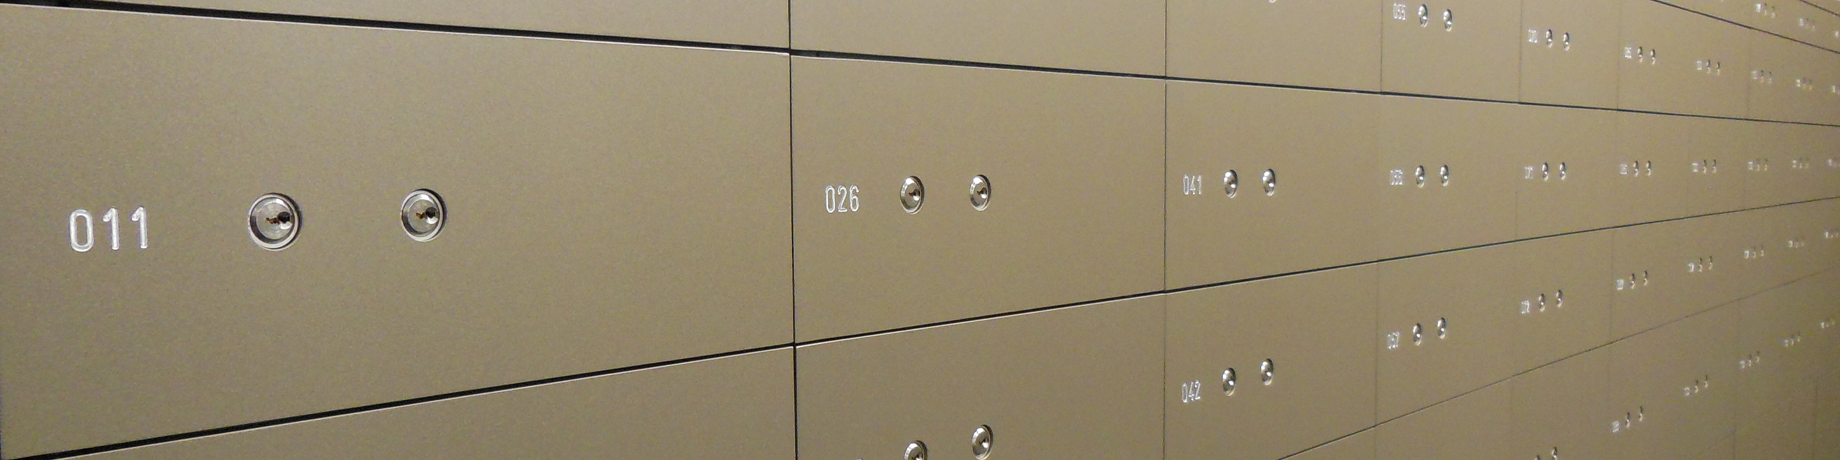 Deposit box systems